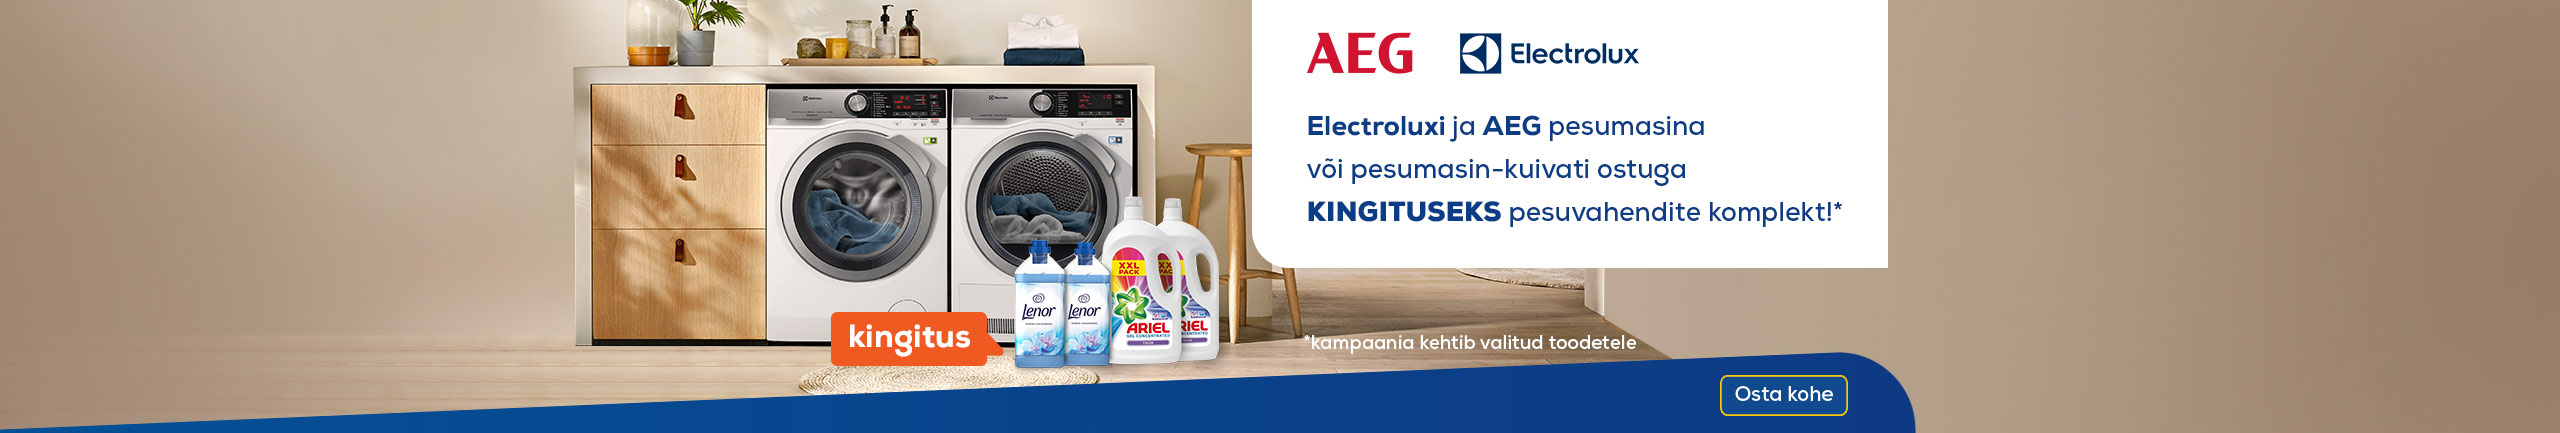 Electroluxi ja AEG pesumasina või pesumasin-kuivati ostuga kingitus!